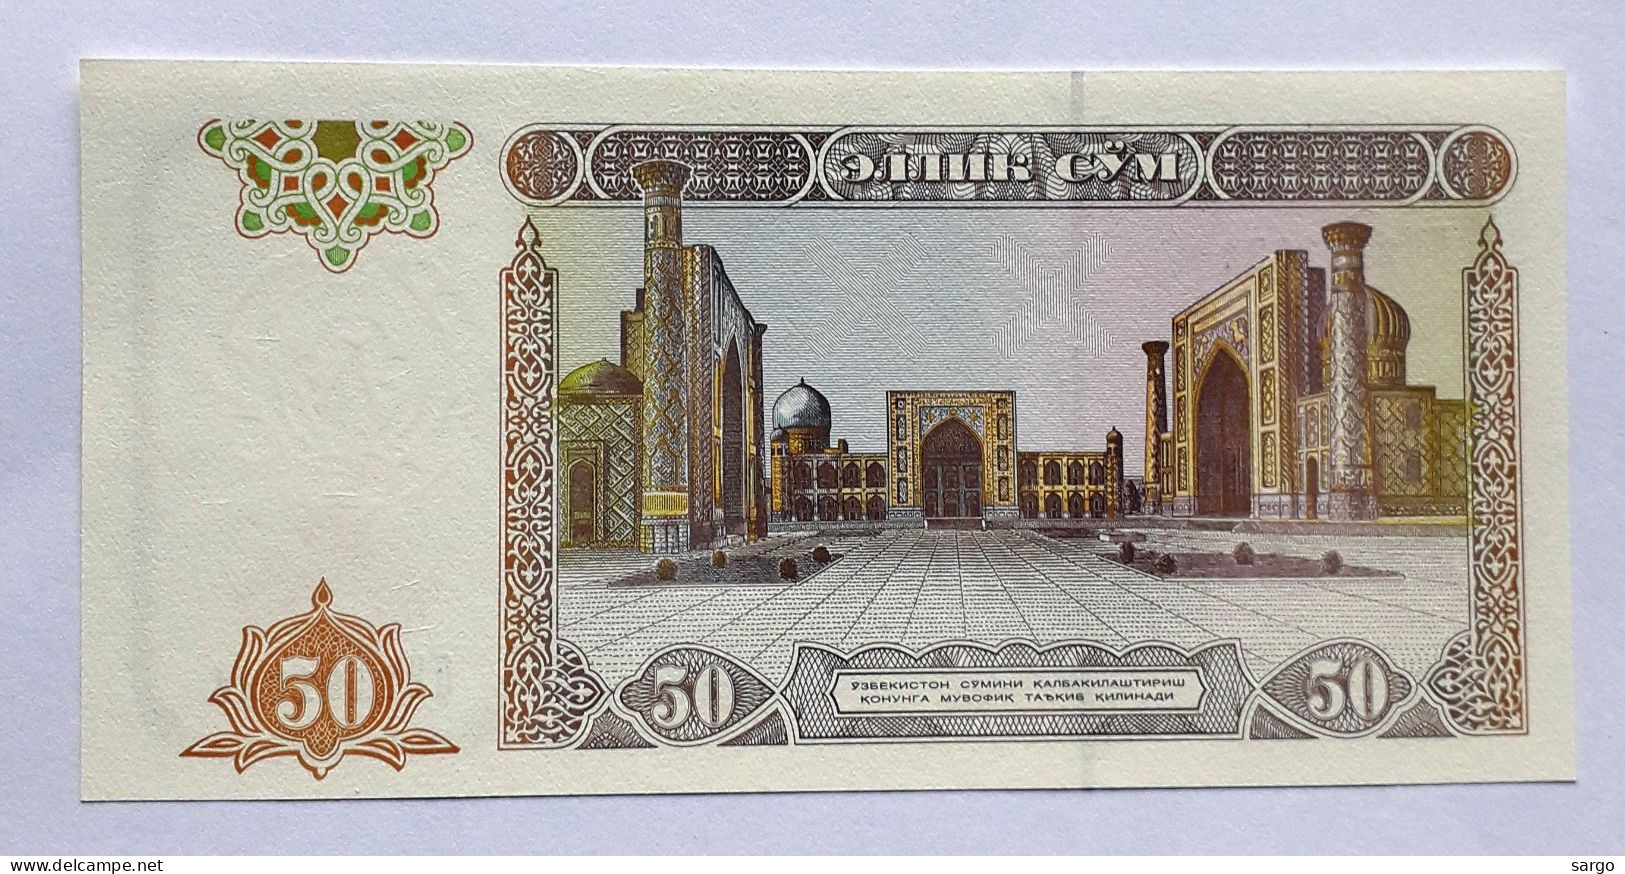 UZBEKISTAN  - 50 SO'M - P 78  (1994) - UNC - BANKNOTES - PAPER MONEY - CARTAMONETA - - Uzbekistan